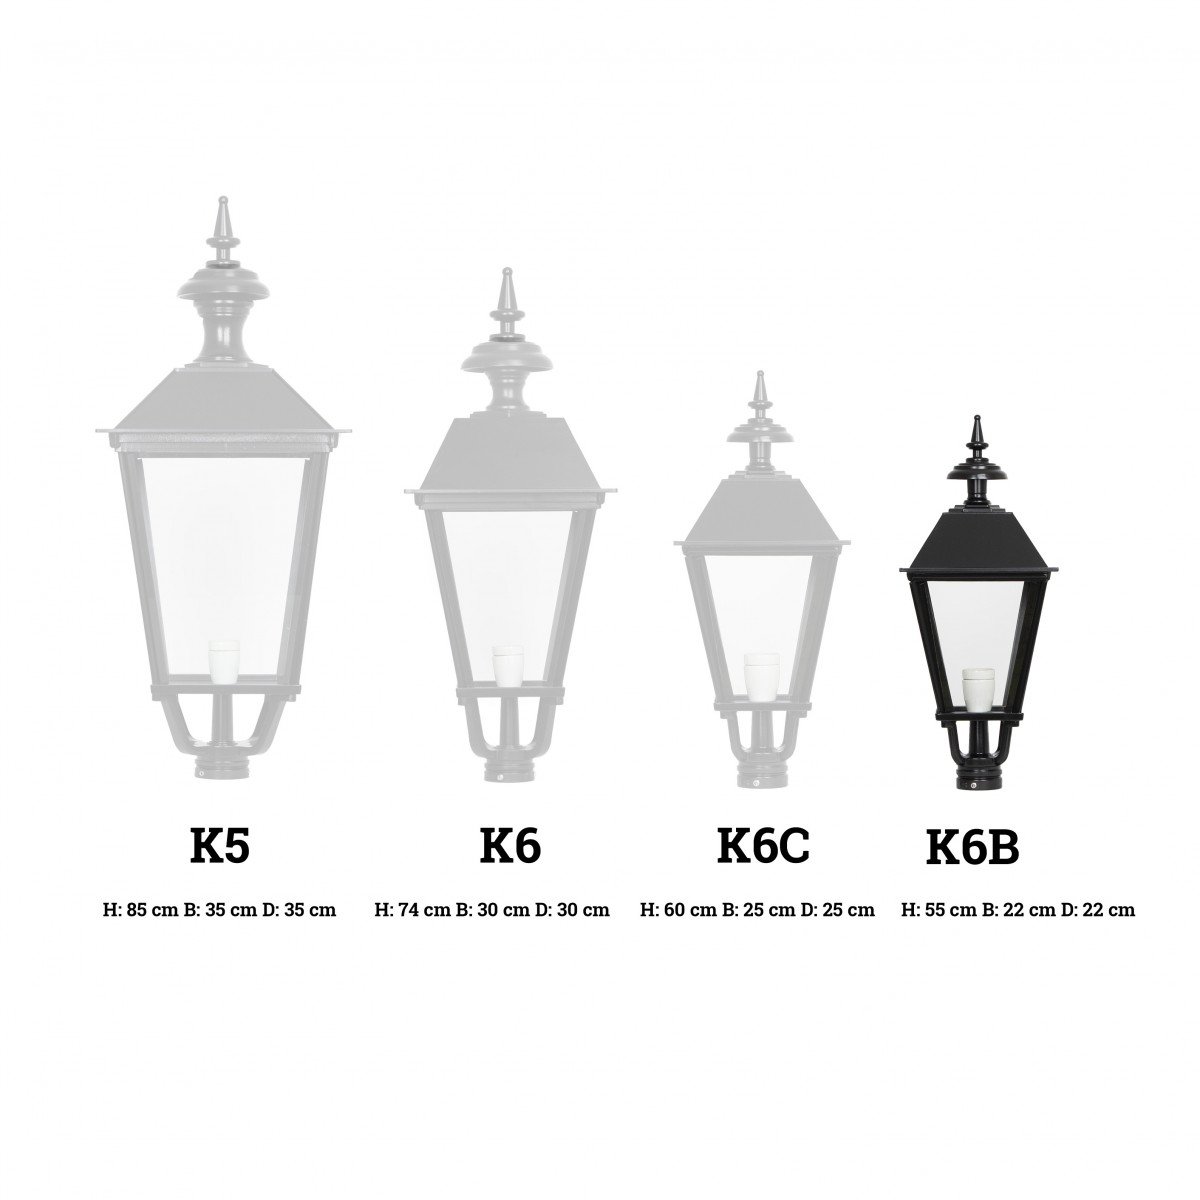 K6B post lantern